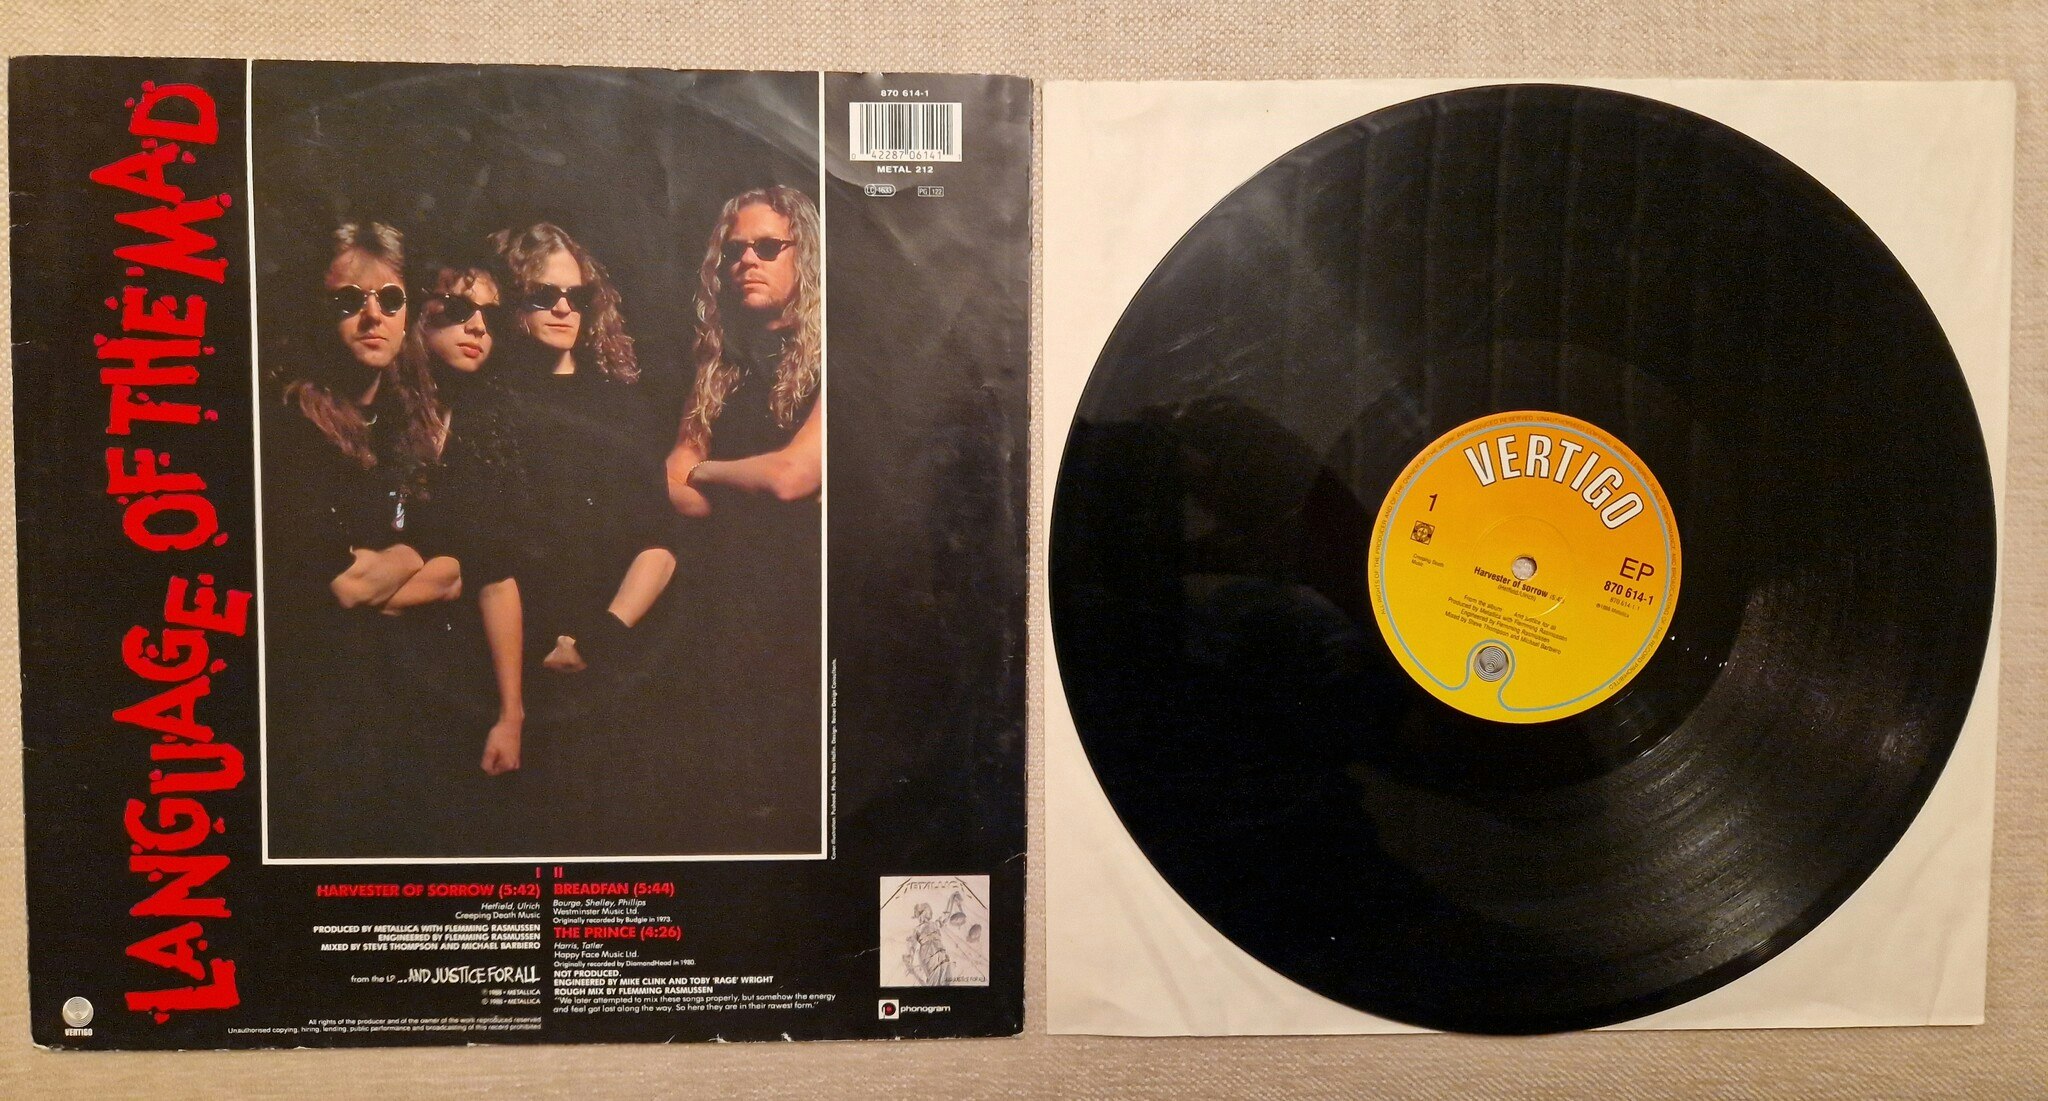 Metallica, Harvester of sorrow. Vinyl S 12"